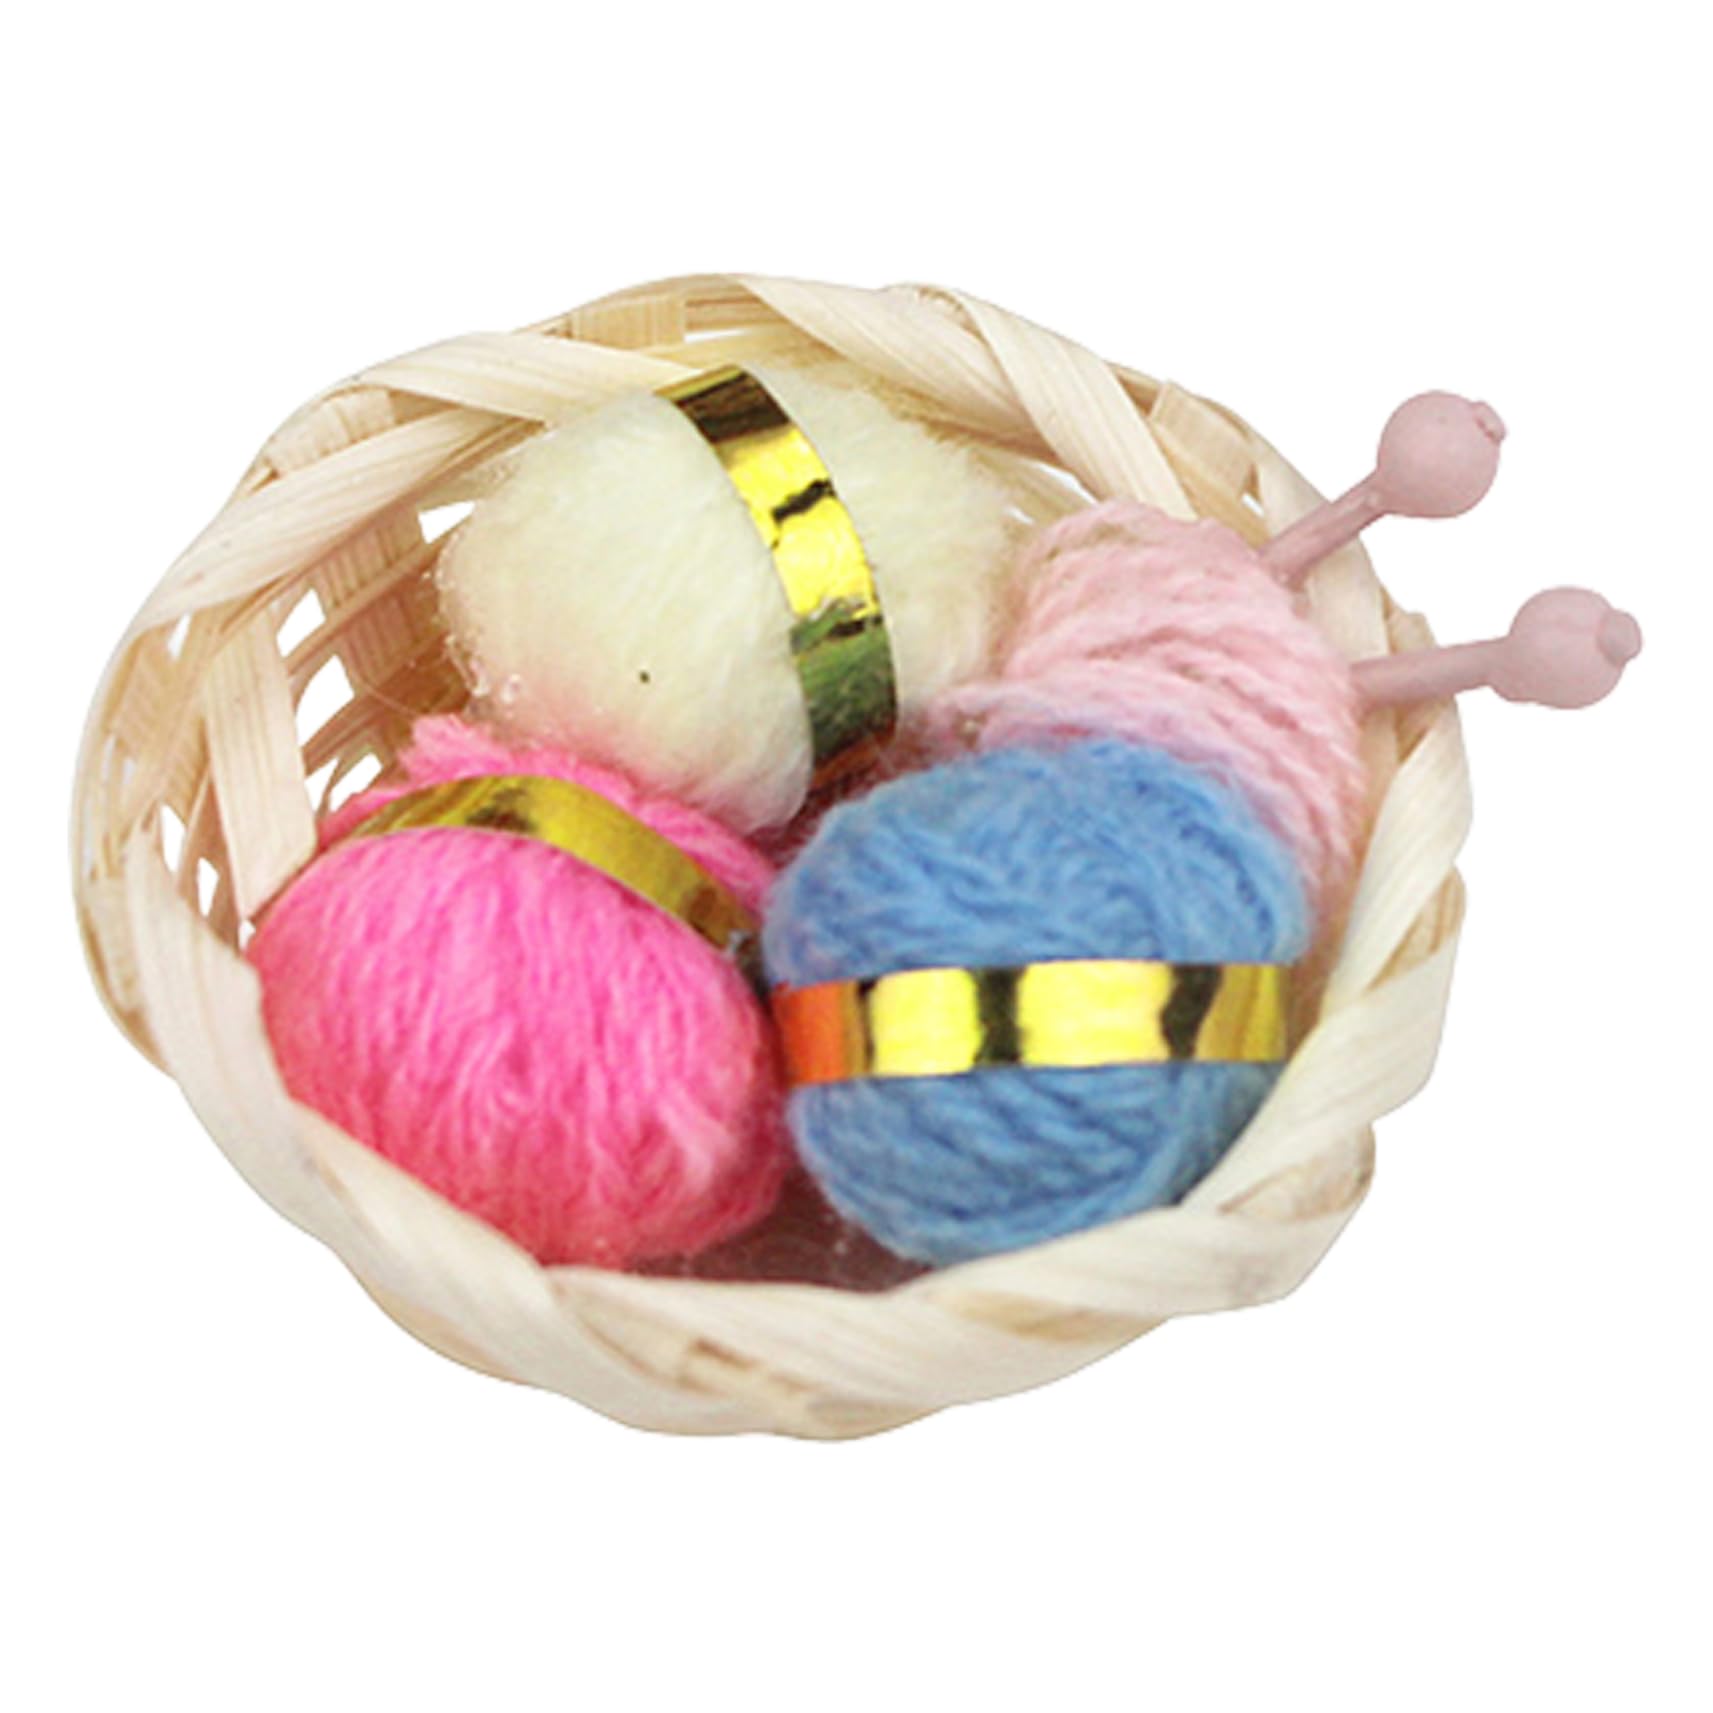 Dollhouse Needle Basket,Miniature Knitting Basket with Woolen Yarn Ball,Mini Knitting Yarn Needles,Dollhouse Accessories for Christmas Dollhouse Decor Miniature.